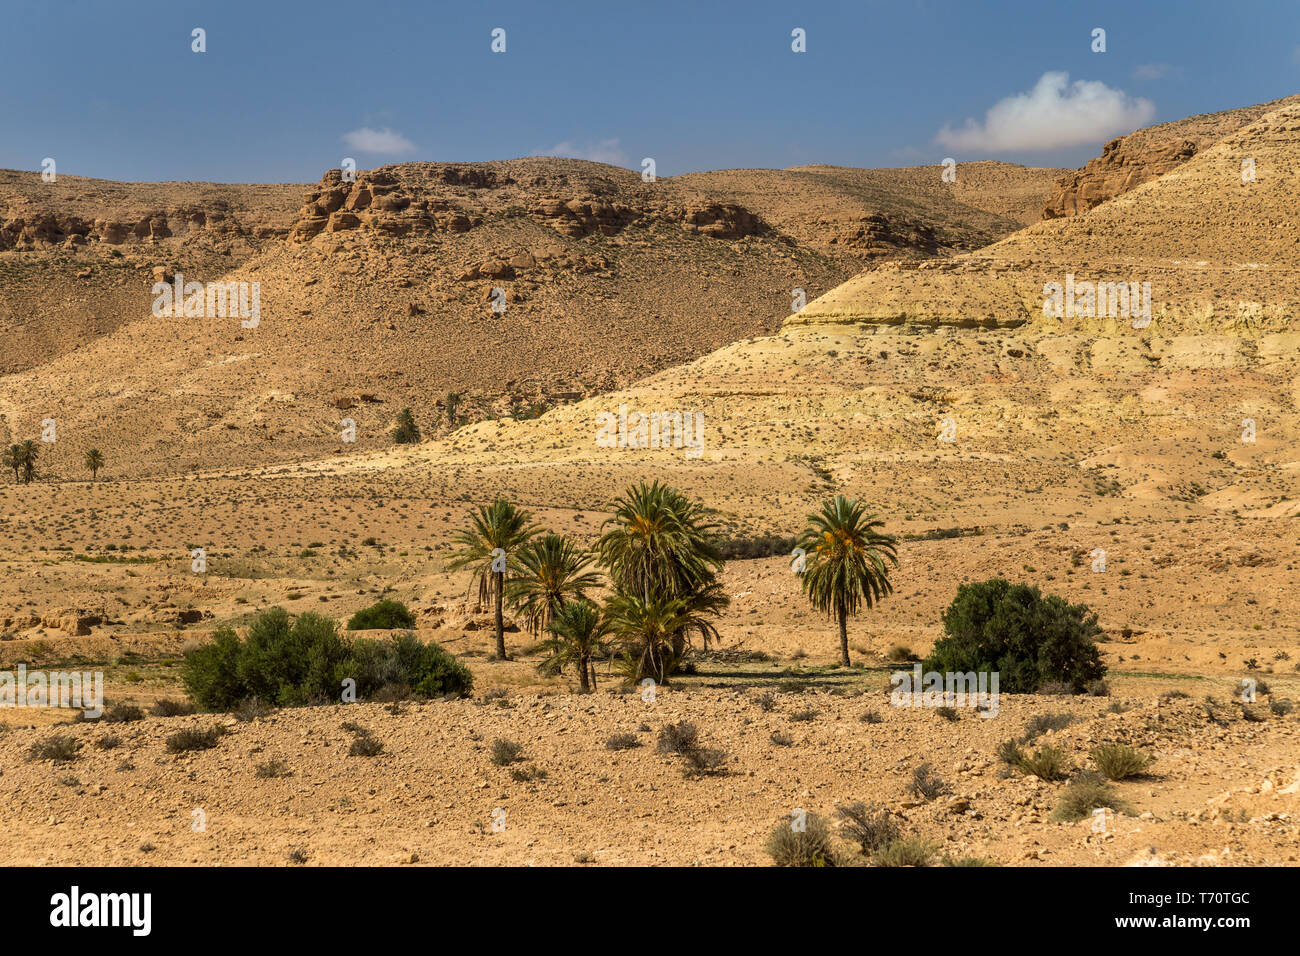 Oasis in a desert. South Tunisia Stock Photo